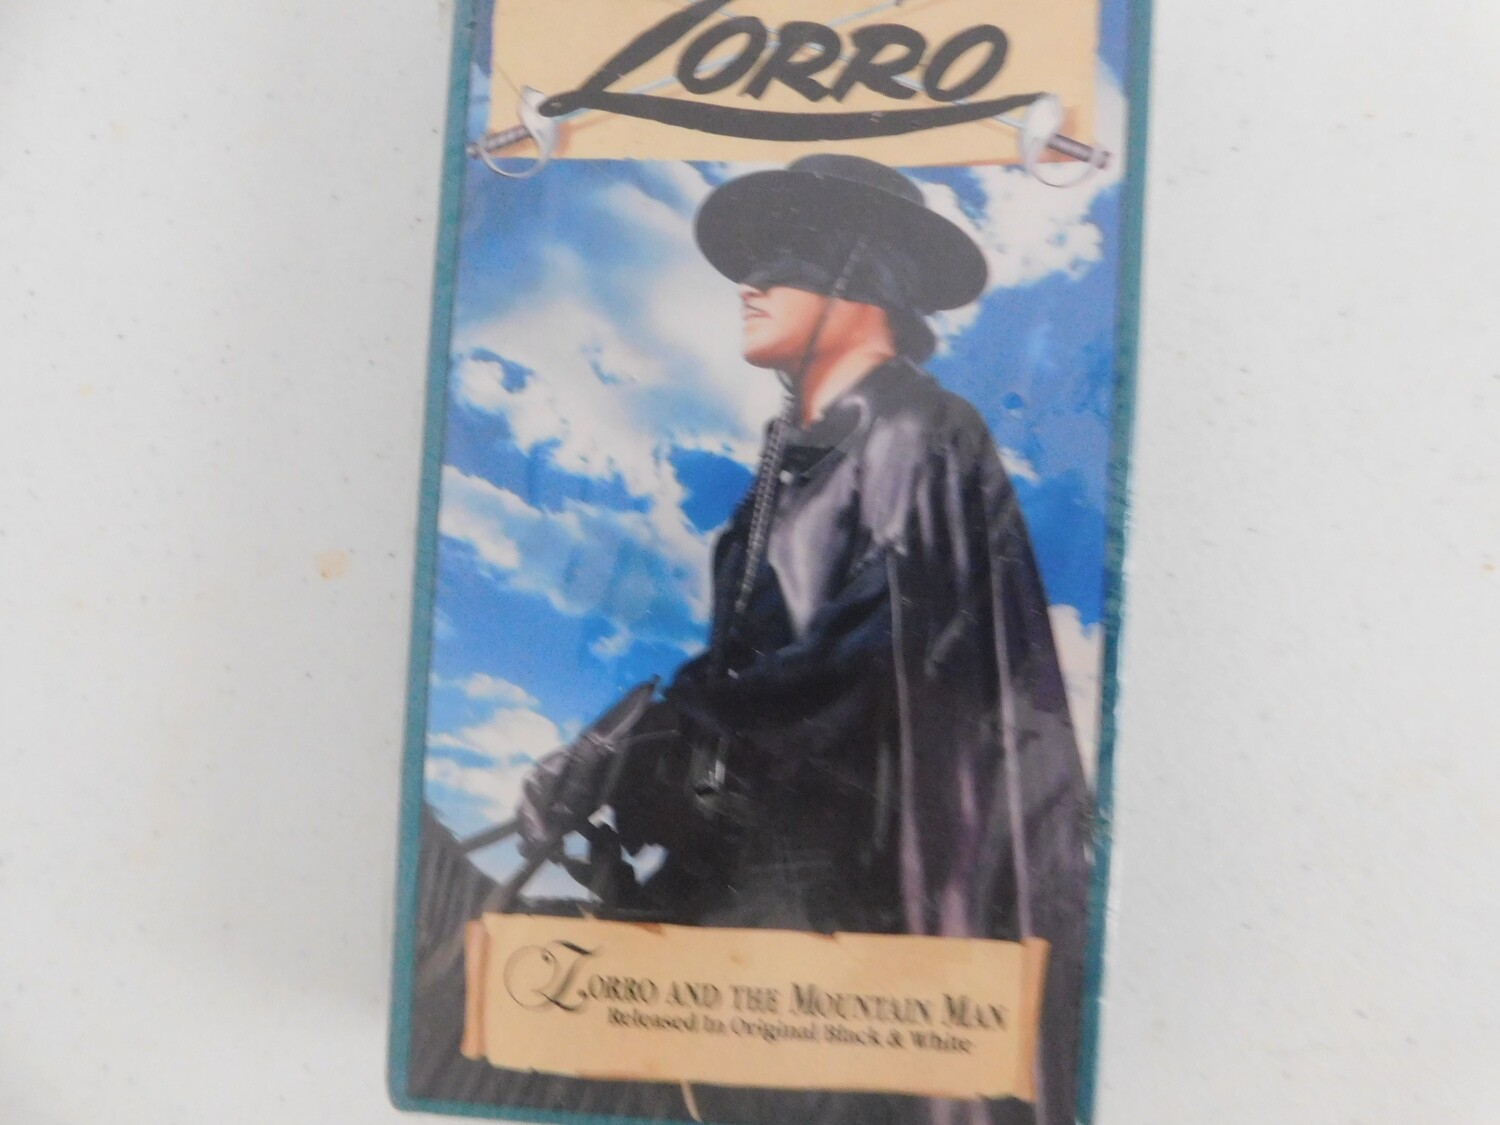 Zorro and the Mountain Man